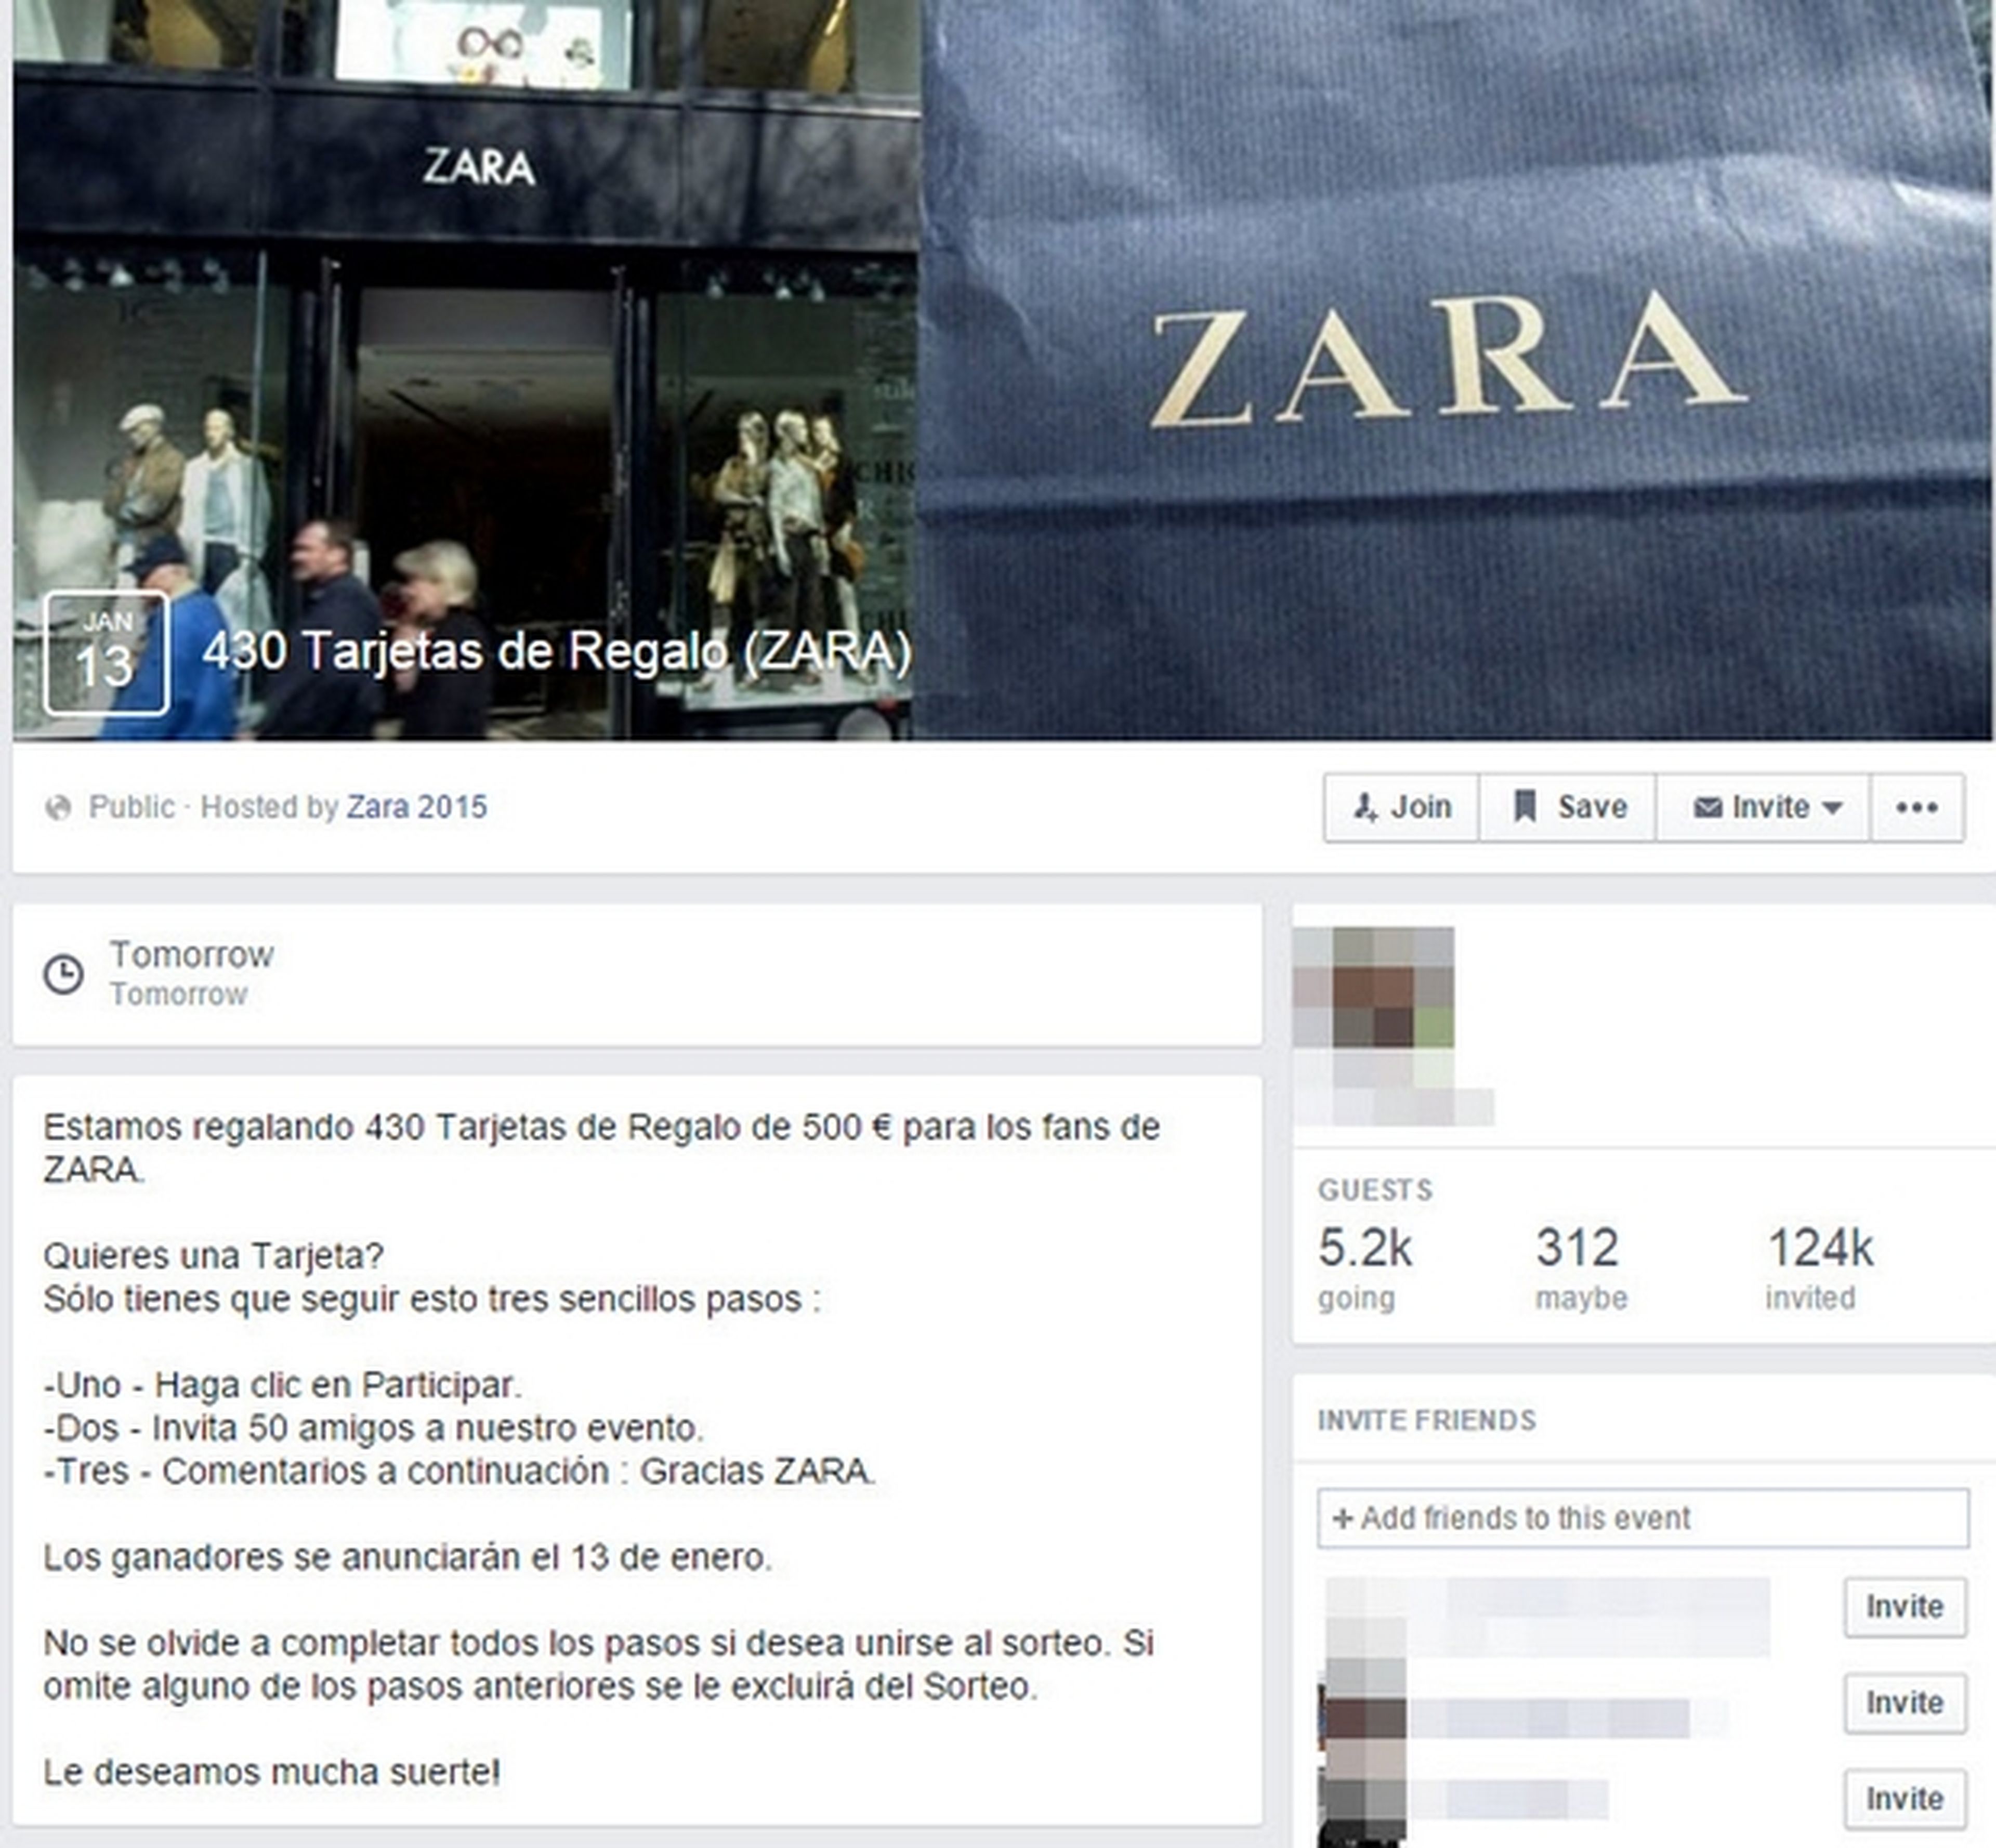 Zara 500€ Tarjetas de regalo new scam on Facebook - Panda